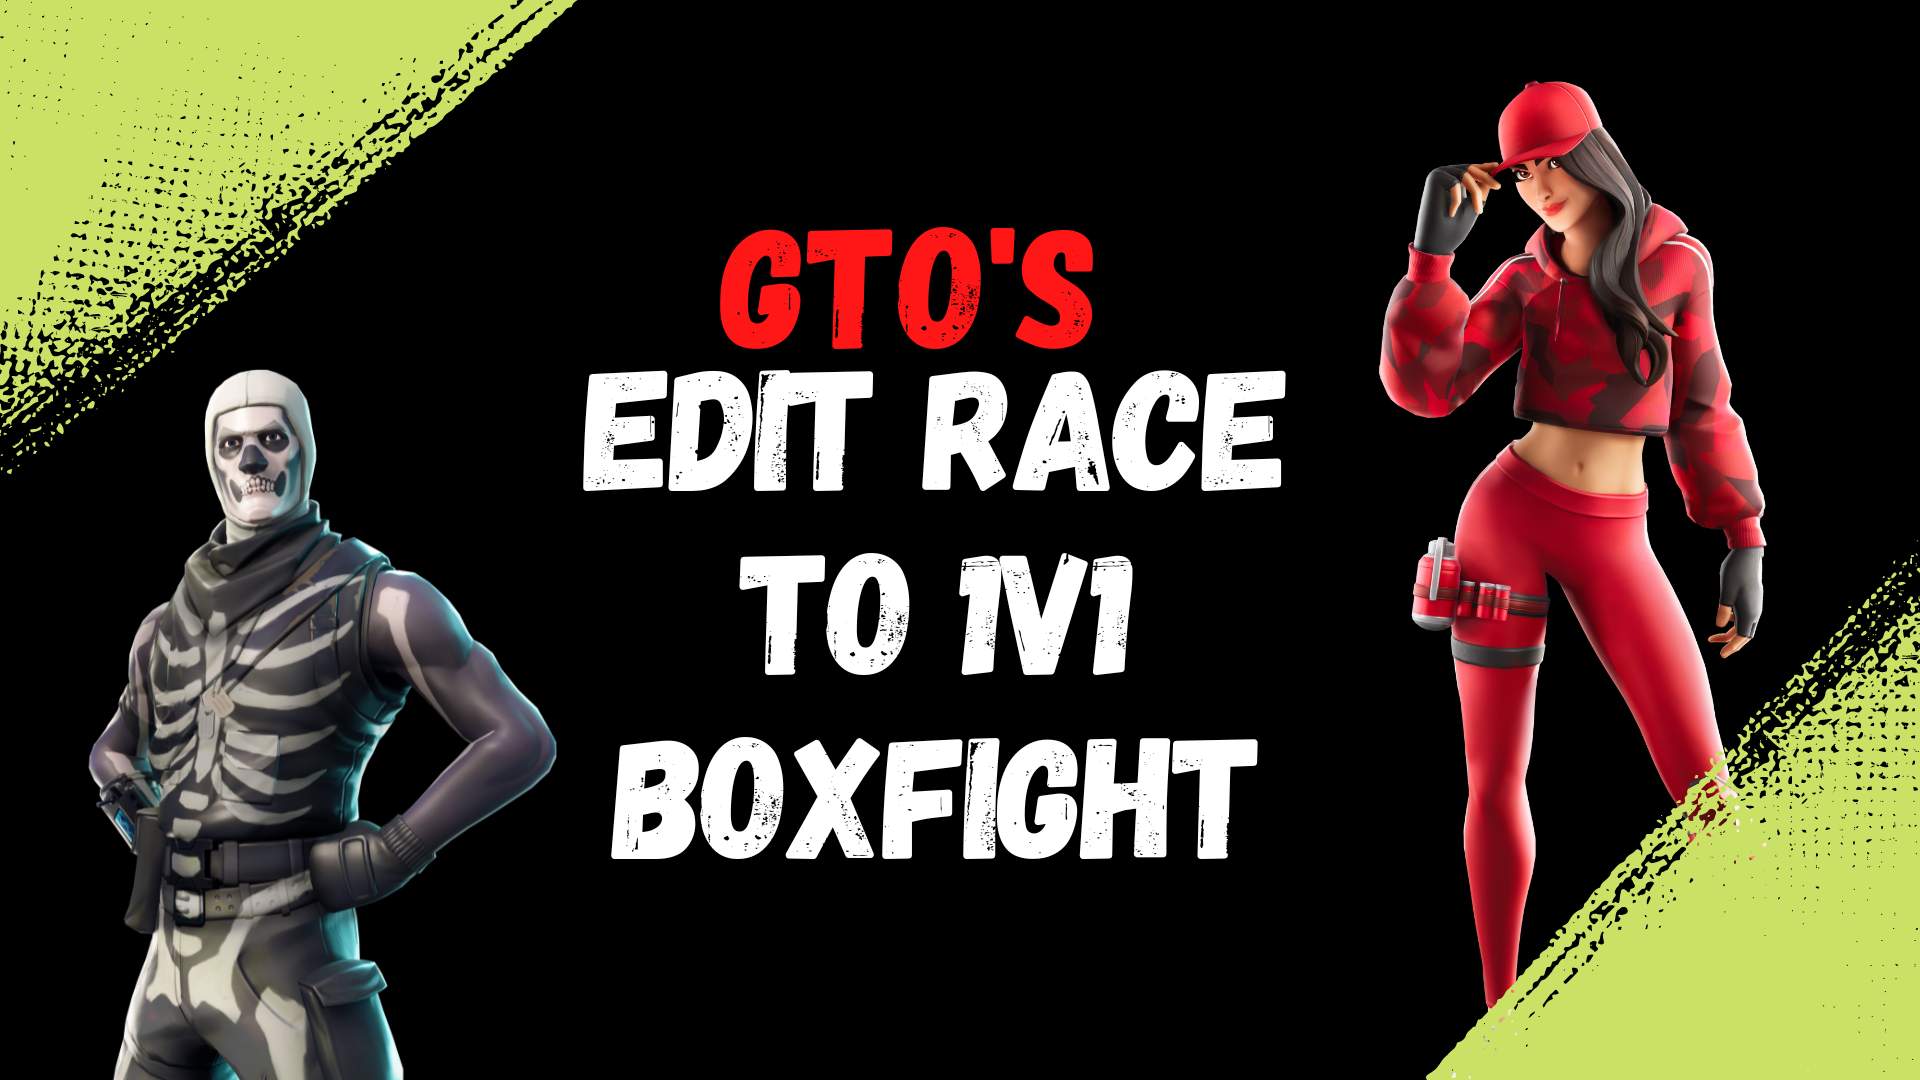 GTO'S EDIT RACE TO 1v1 BOXFIGHT